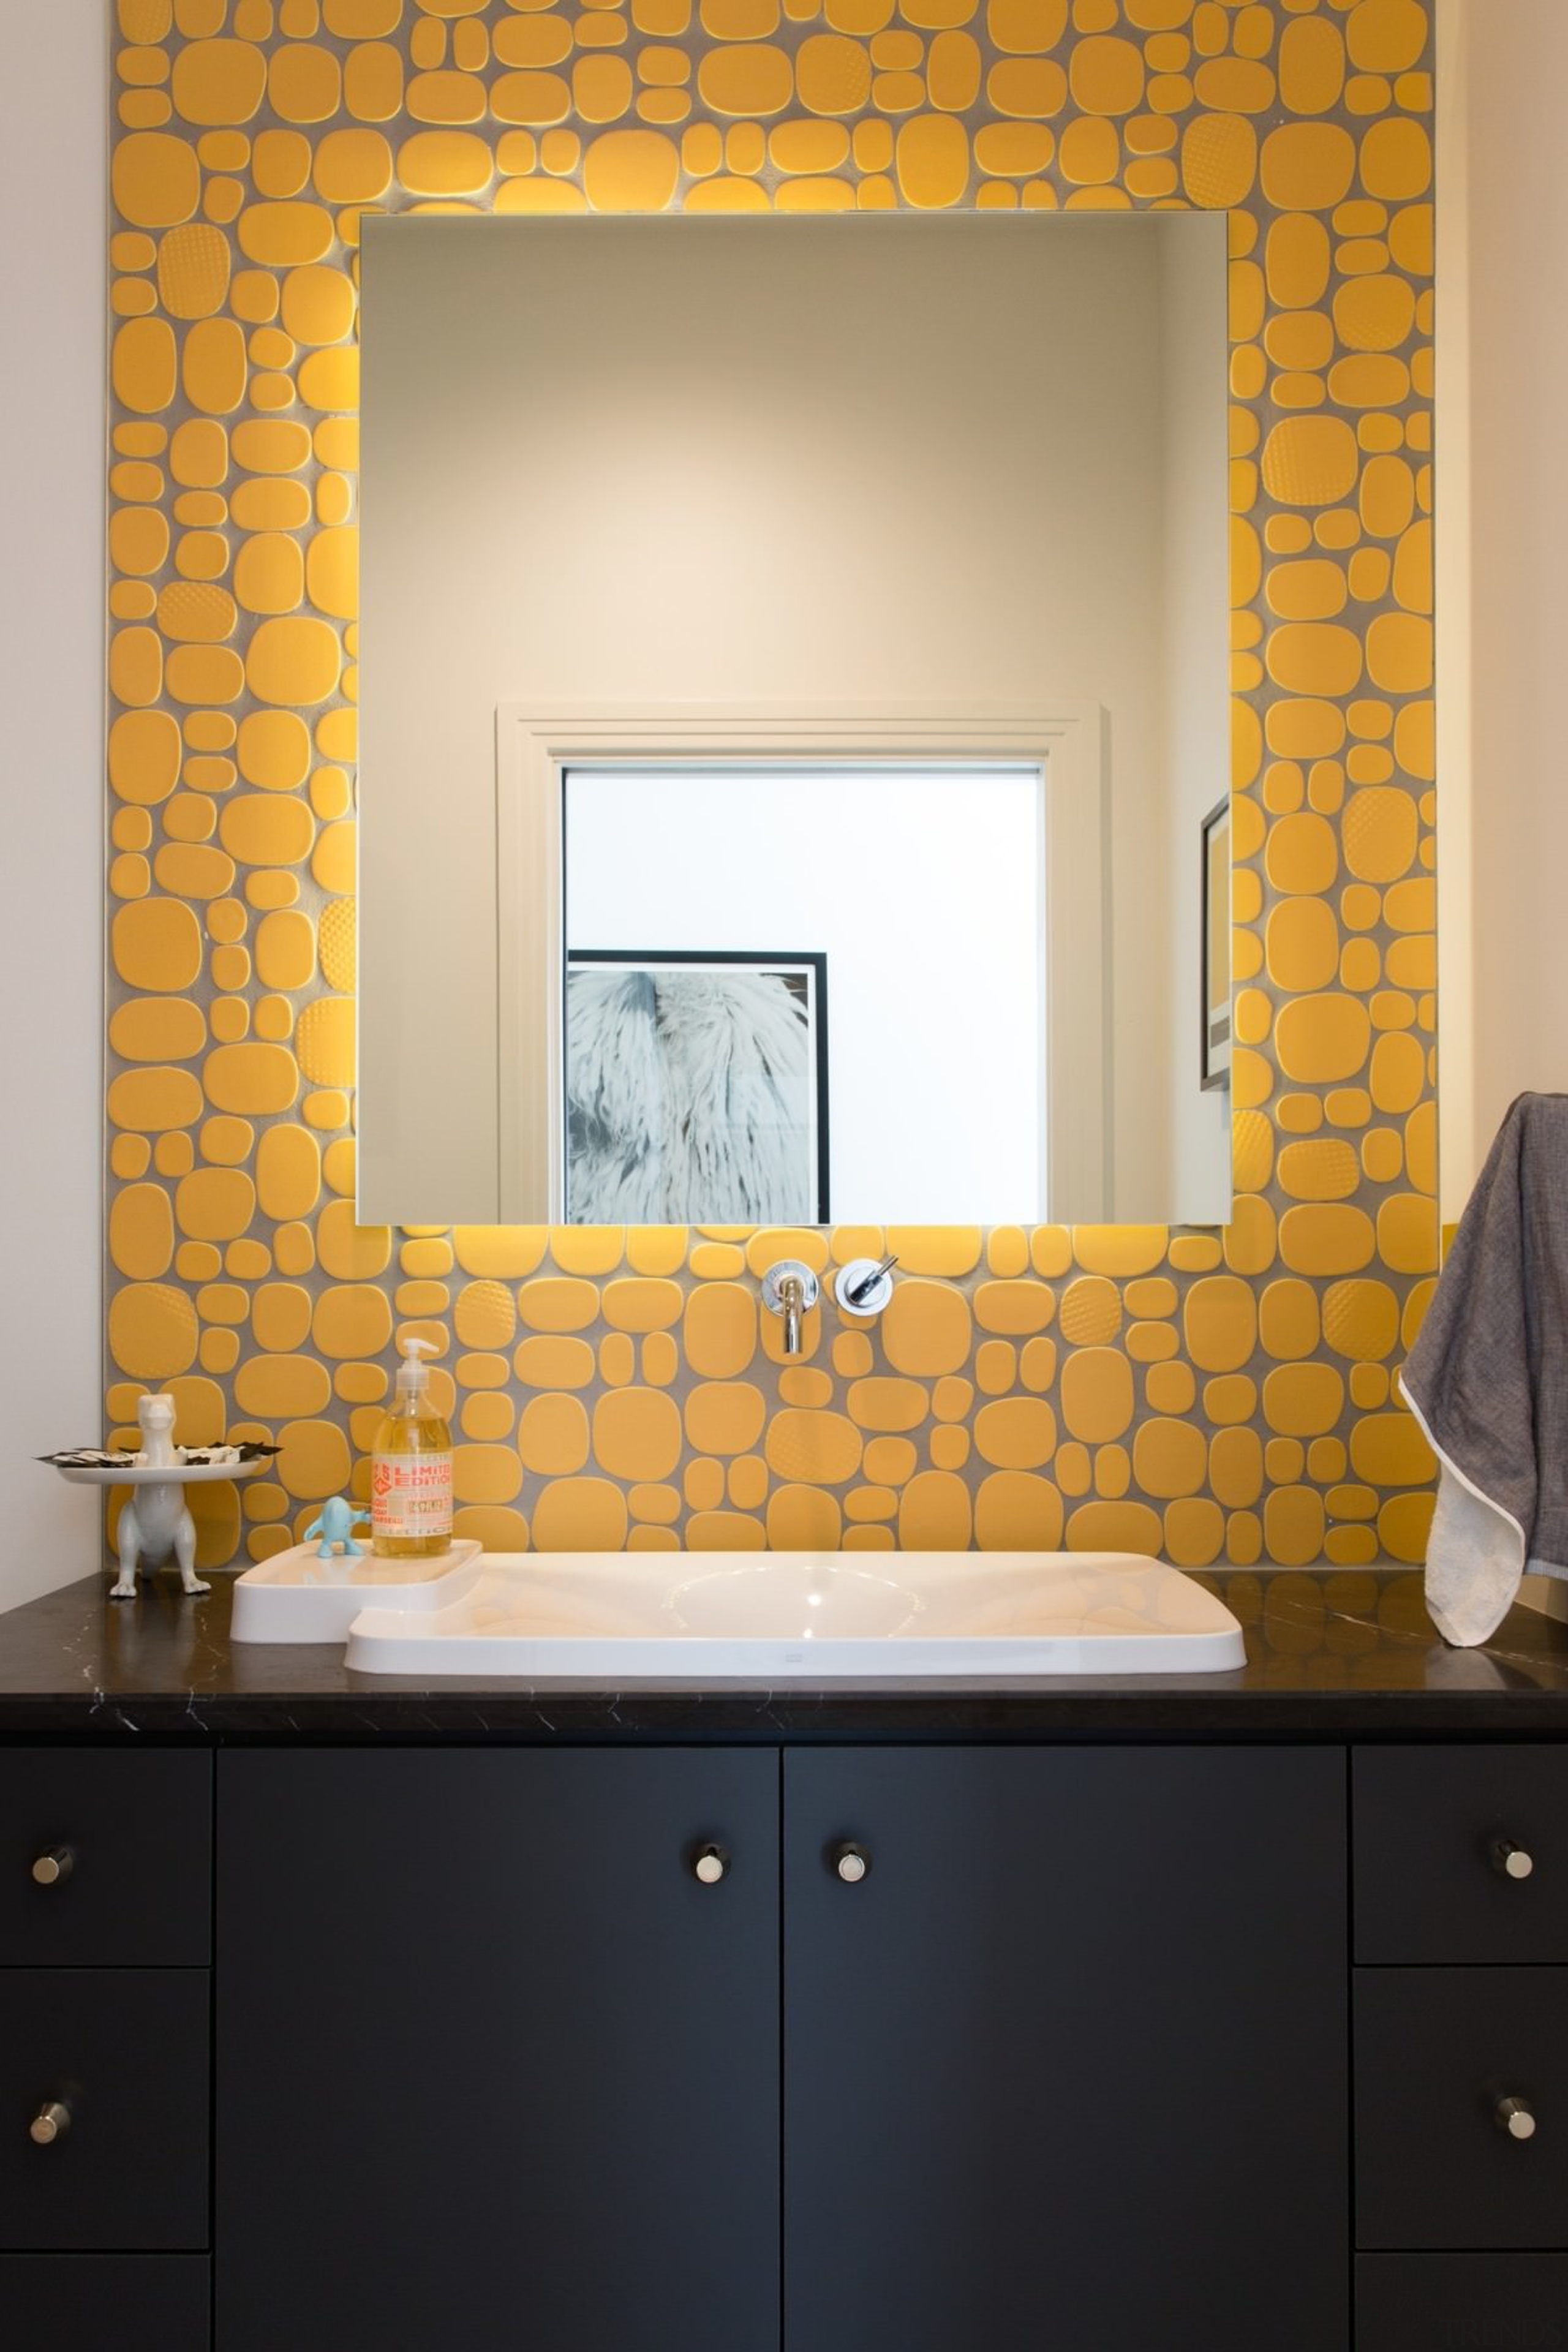 The yellow certainly draws the eye in this bathroom, floor, flooring, interior design, room, sink, tile, wall, window, orange, black